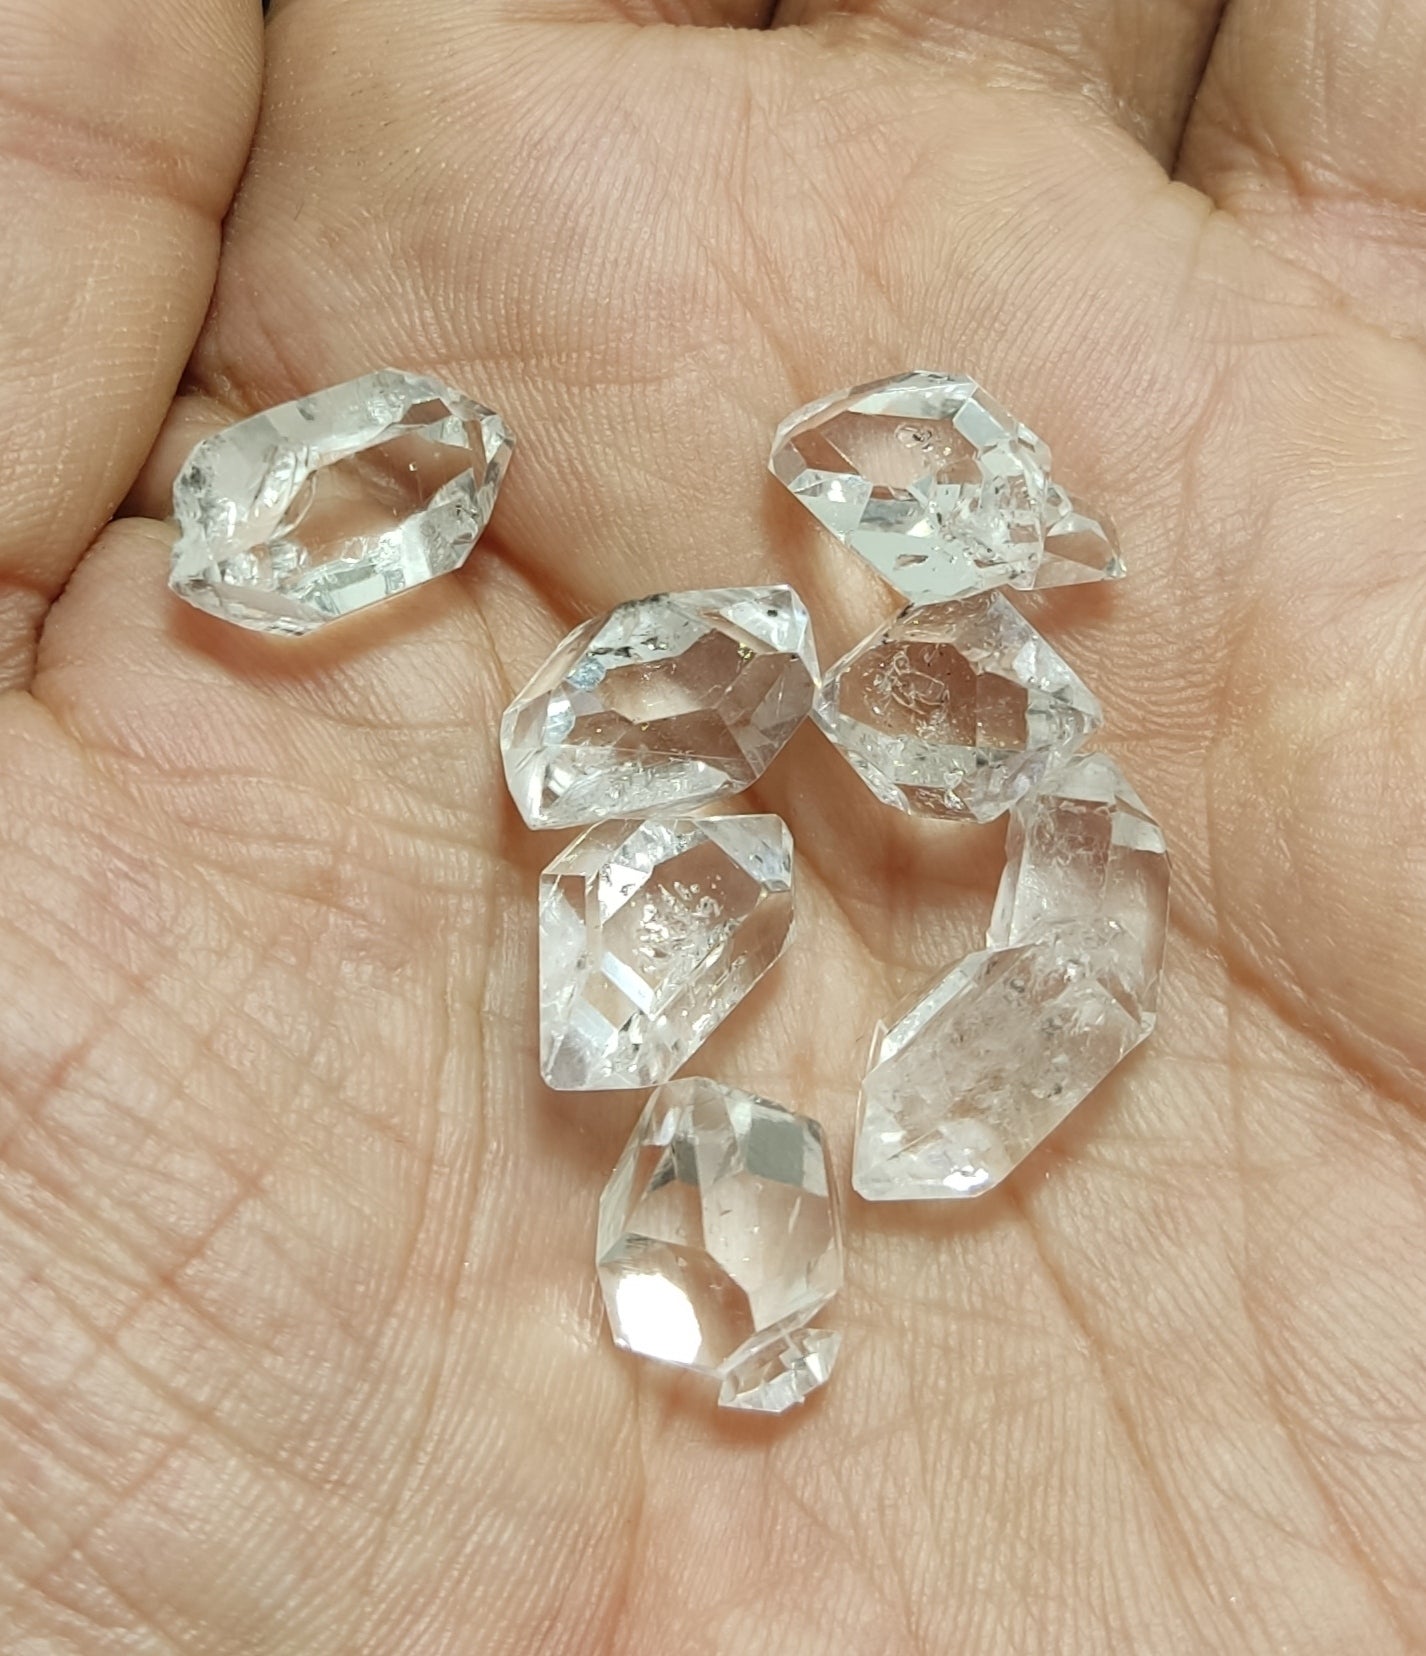 An aesthetic lot of terminated diamond like quartz crystals 135 grams